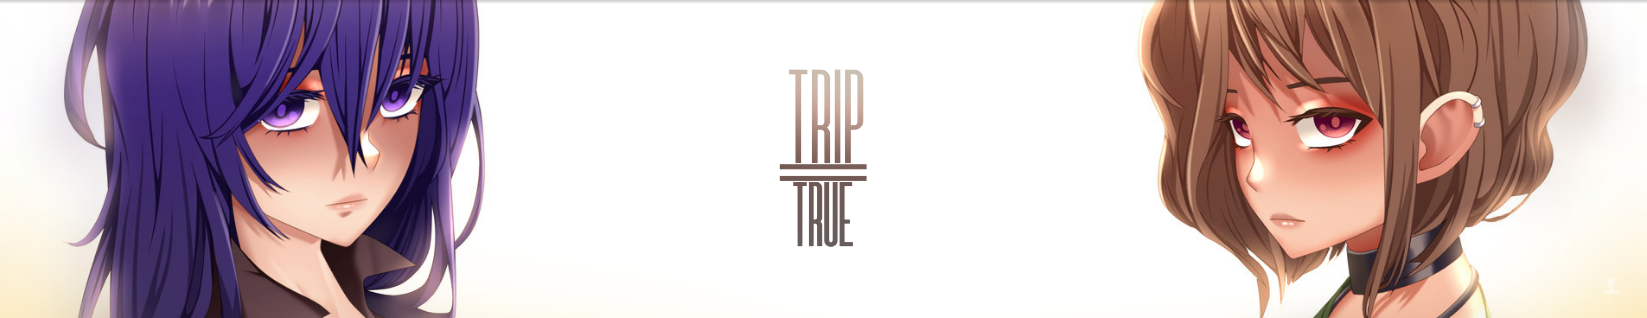 Trip=True poster